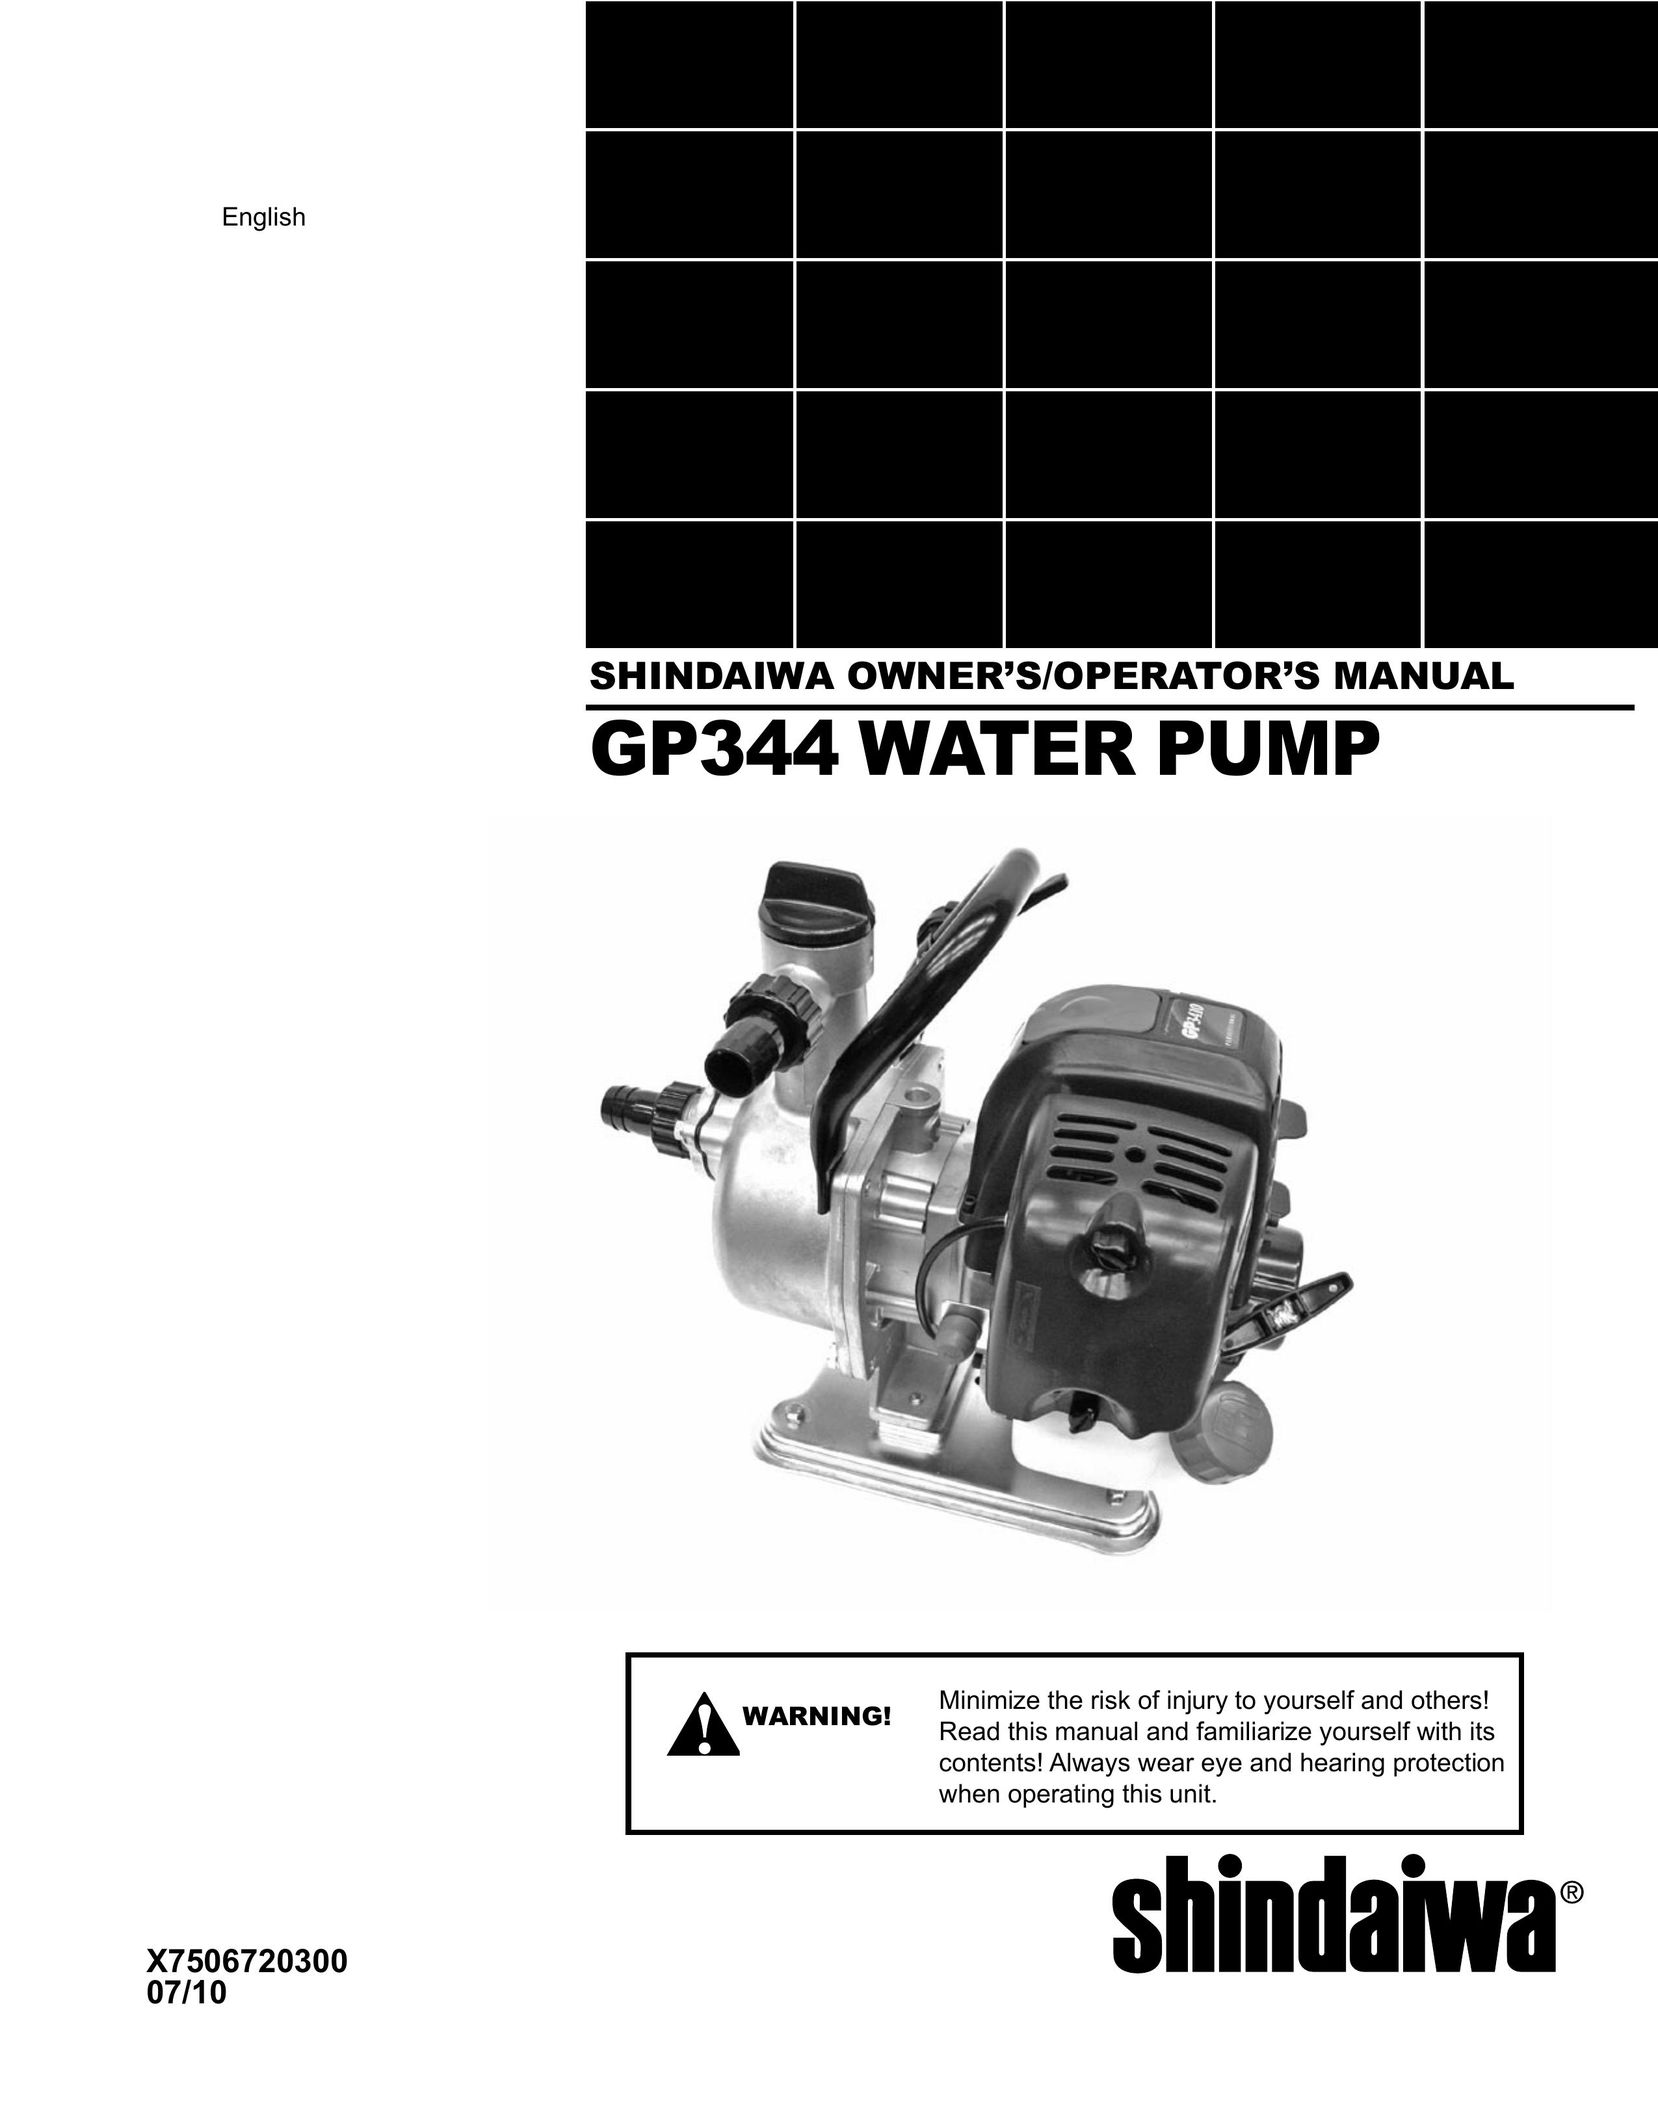 Shindaiwa GP344 Water Pump User Manual